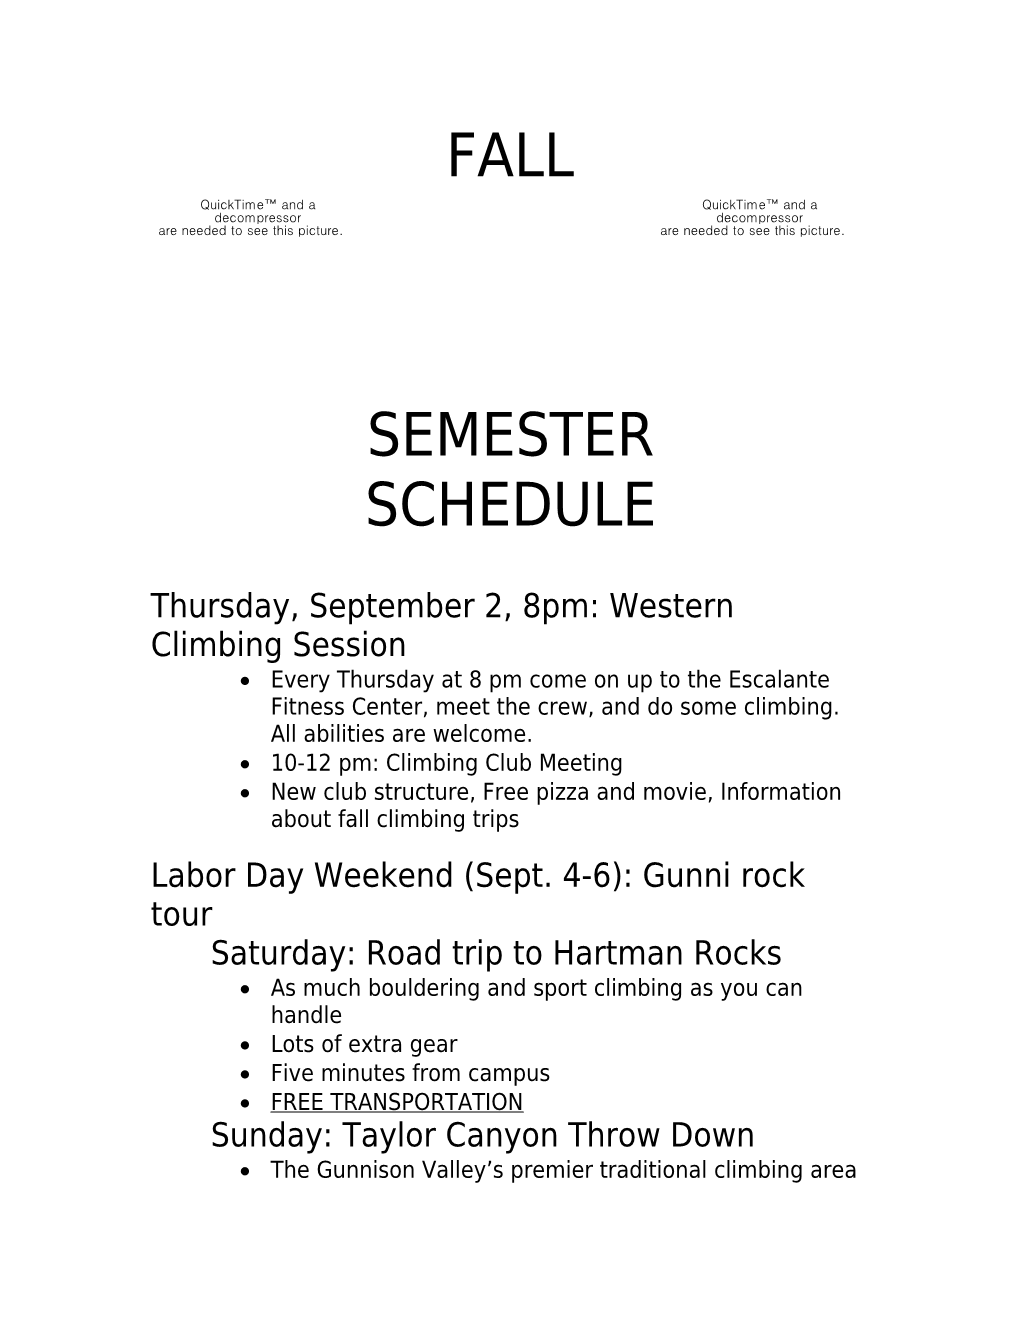 Thursday, September 2, 8Pm: Western Climbing Session